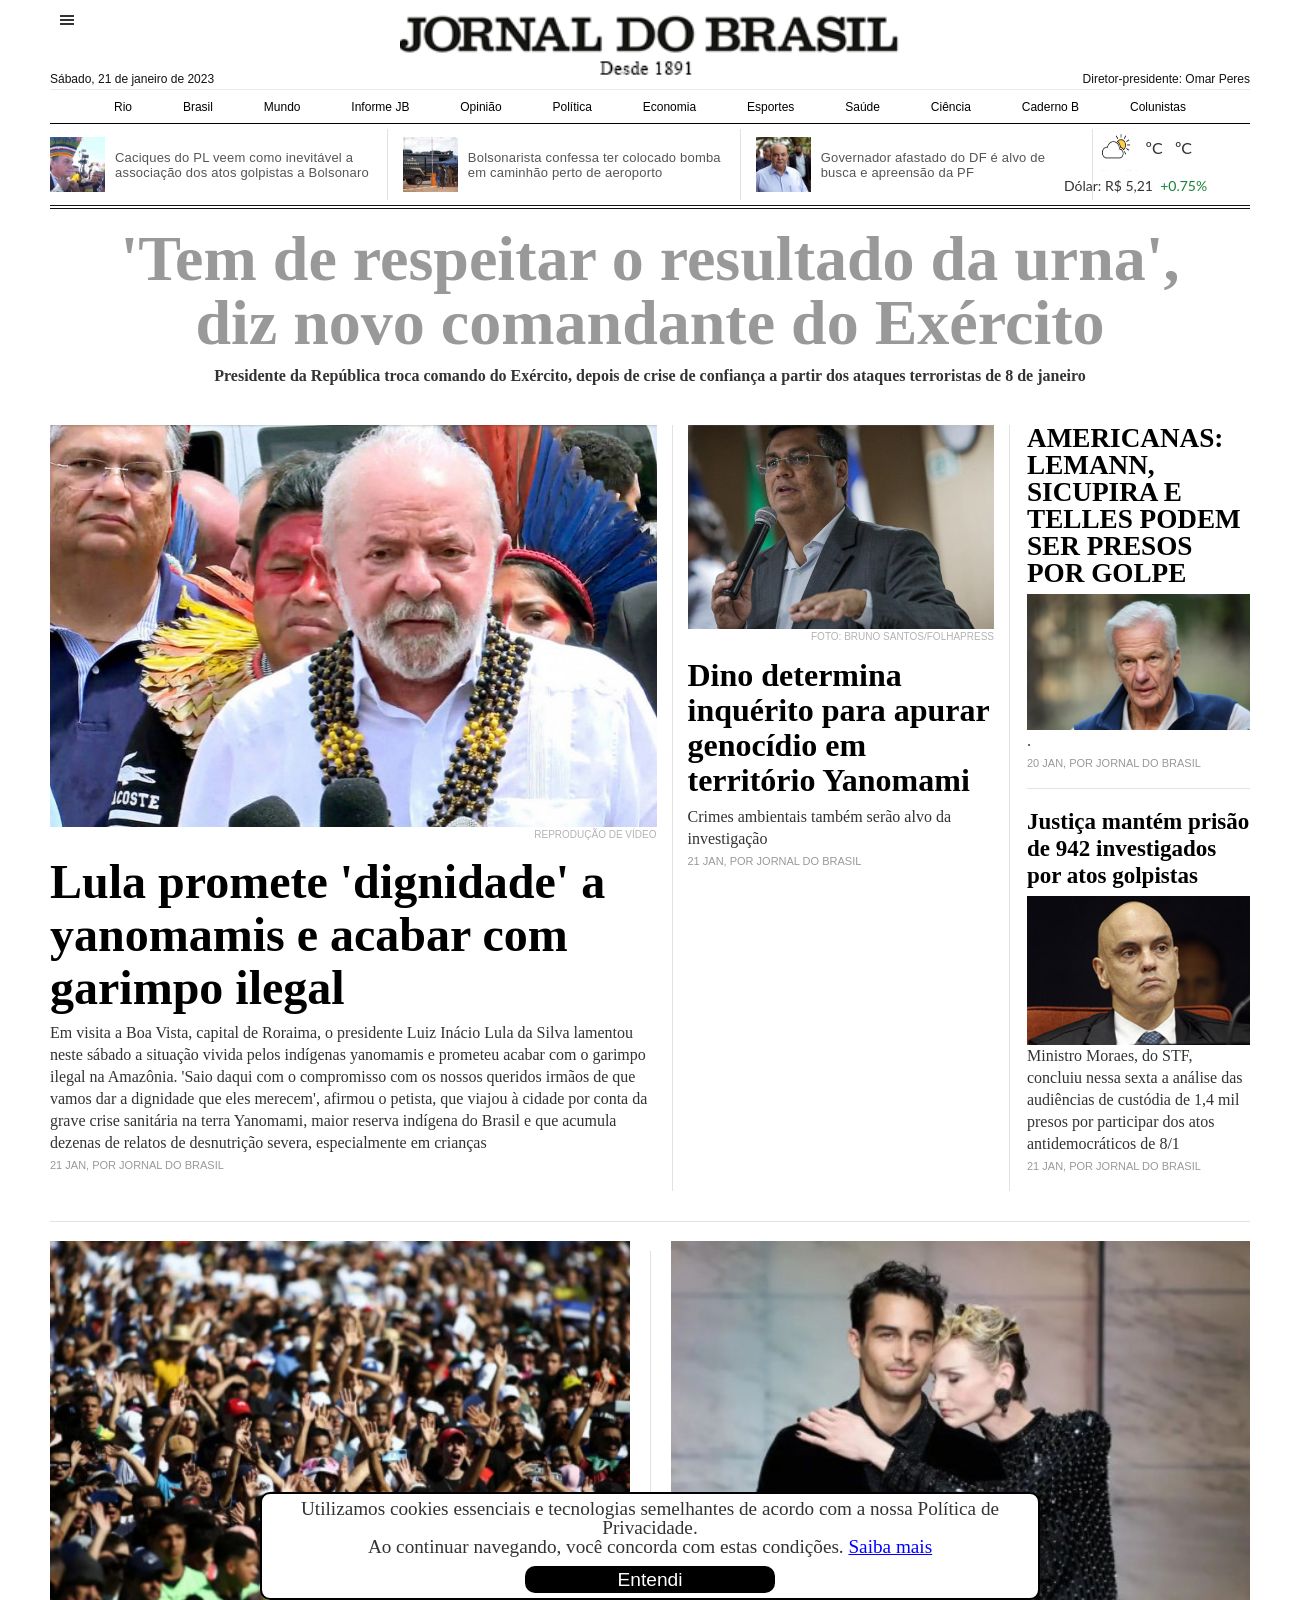 Jornal do Brasil at 2023-01-21 20:08:28-03:00 local time